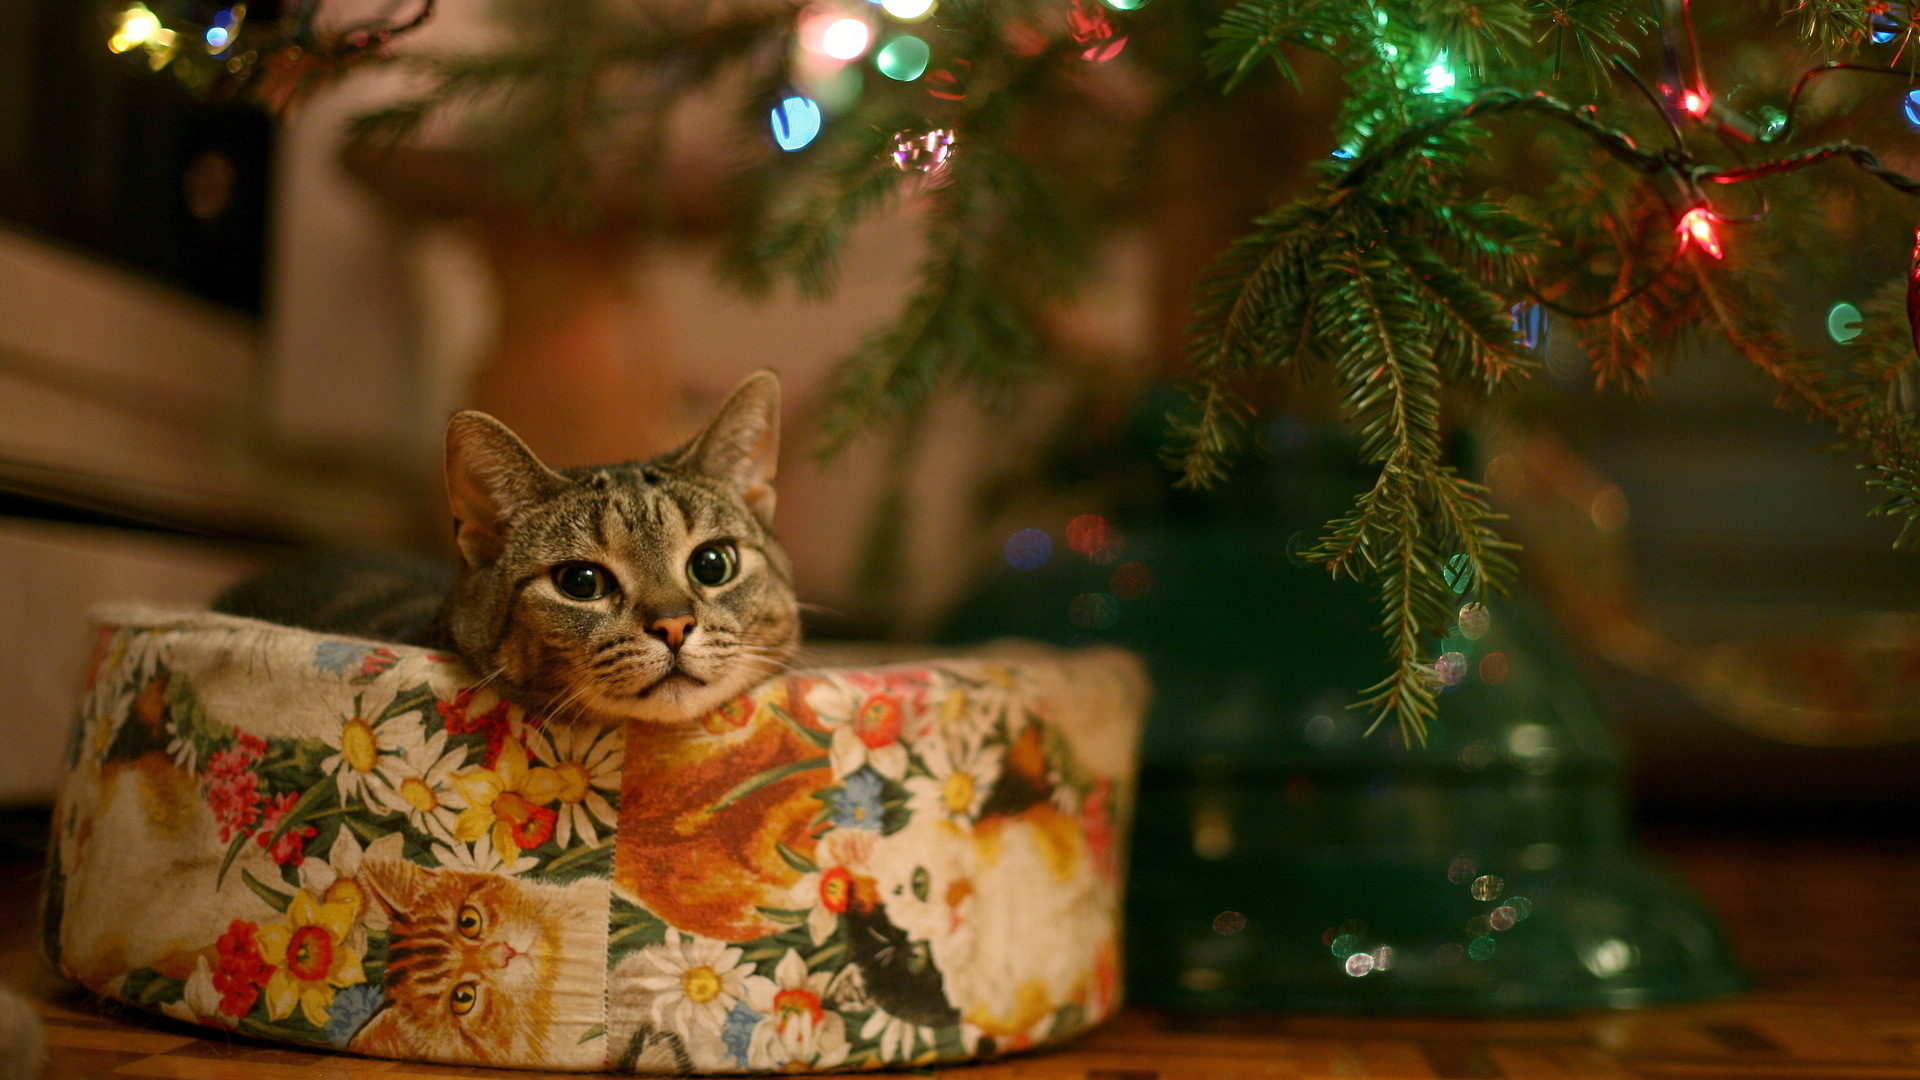  christmas cat Full HD 1080p wallpaper 19201080 Cat pictures